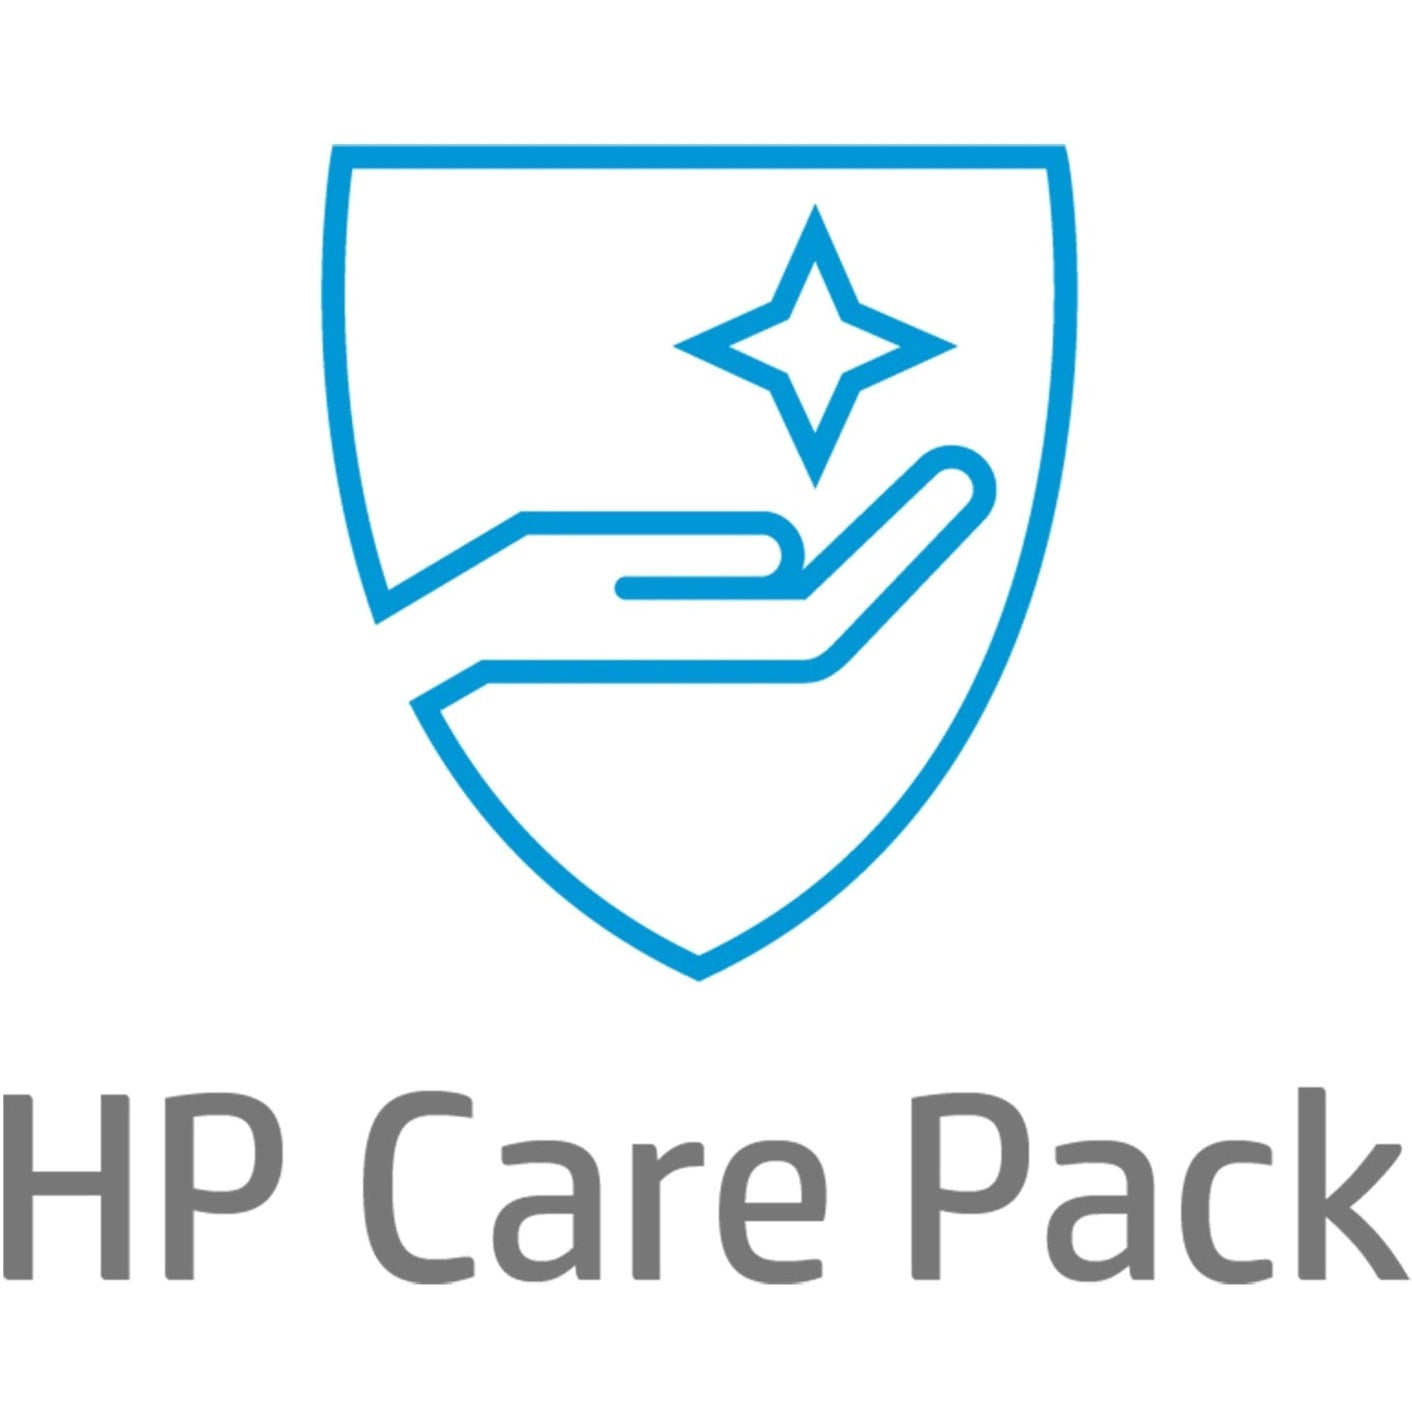 HP Care Pack - 5 Year - Warranty (UA6J1E)